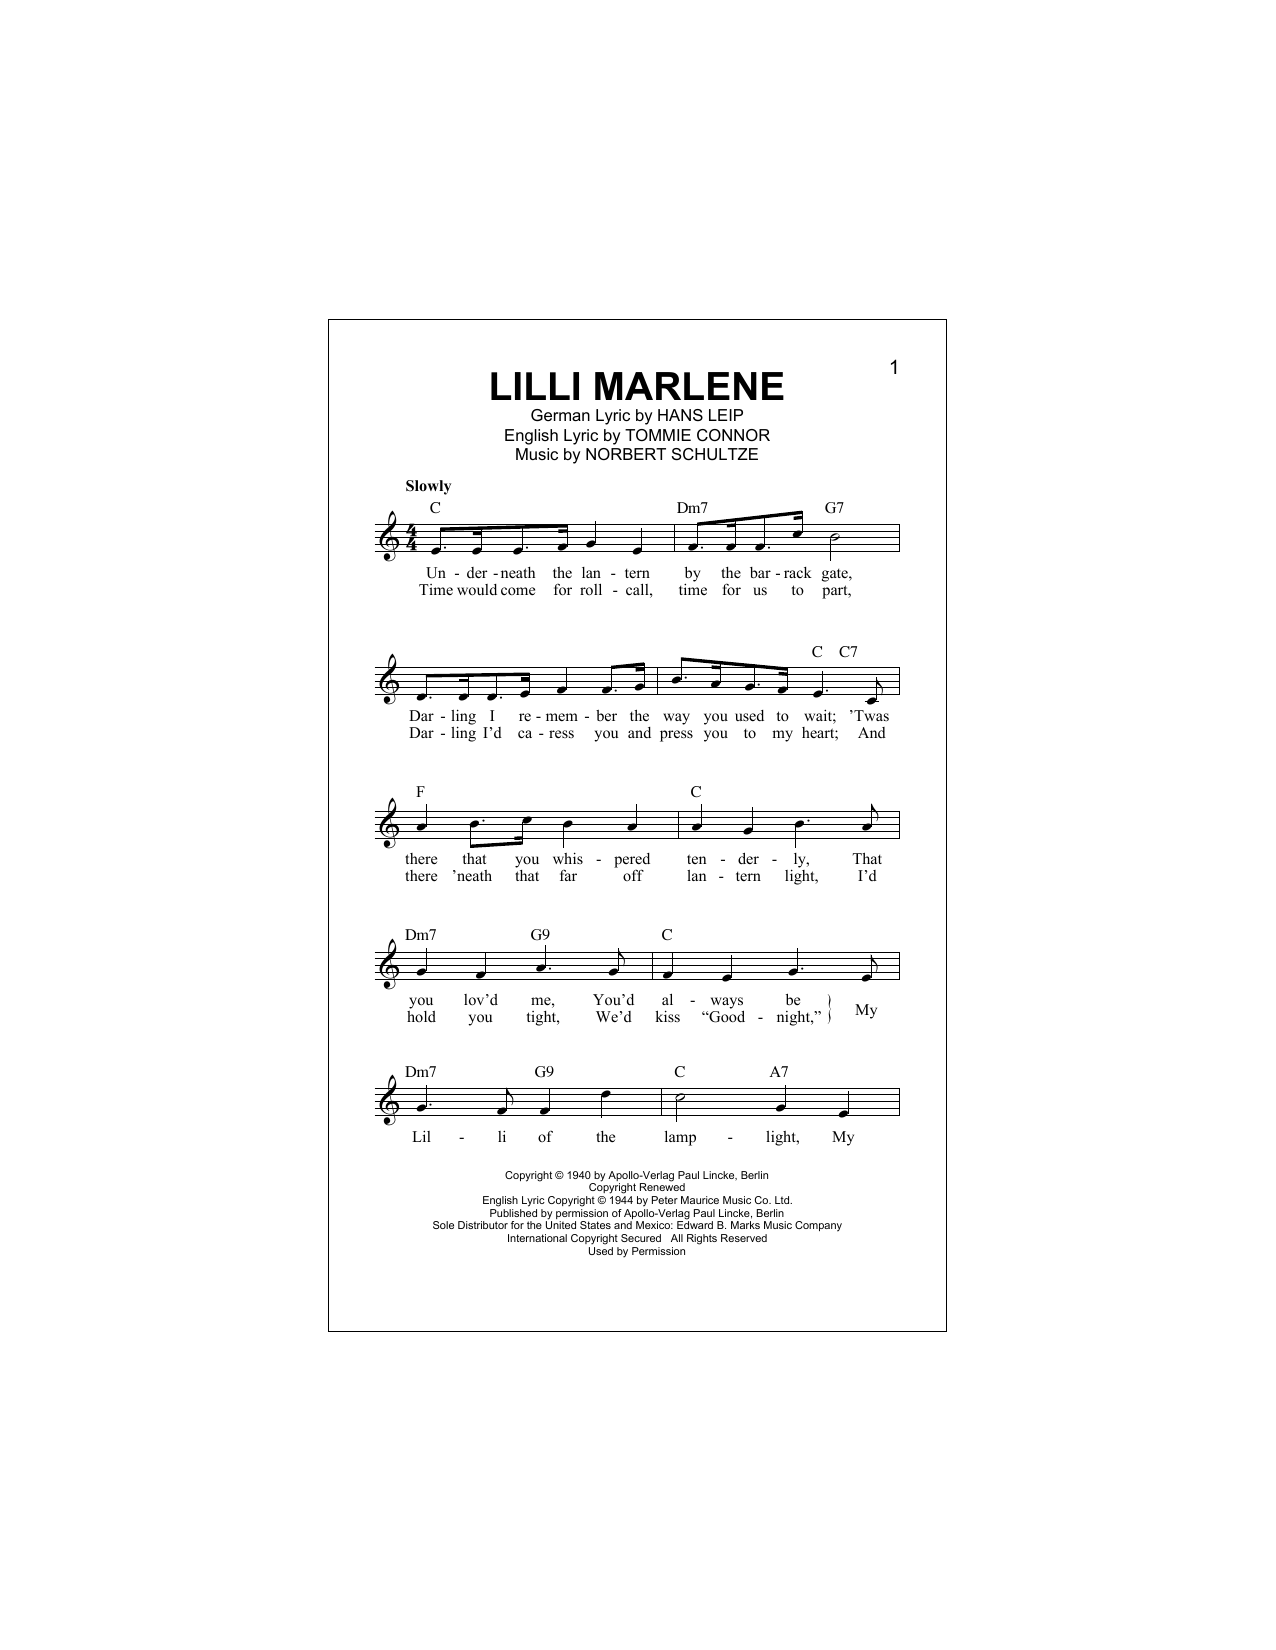 Marlene Dietrich Lilli Marlene (Lili Marleen) sheet music notes and chords arranged for Lead Sheet / Fake Book